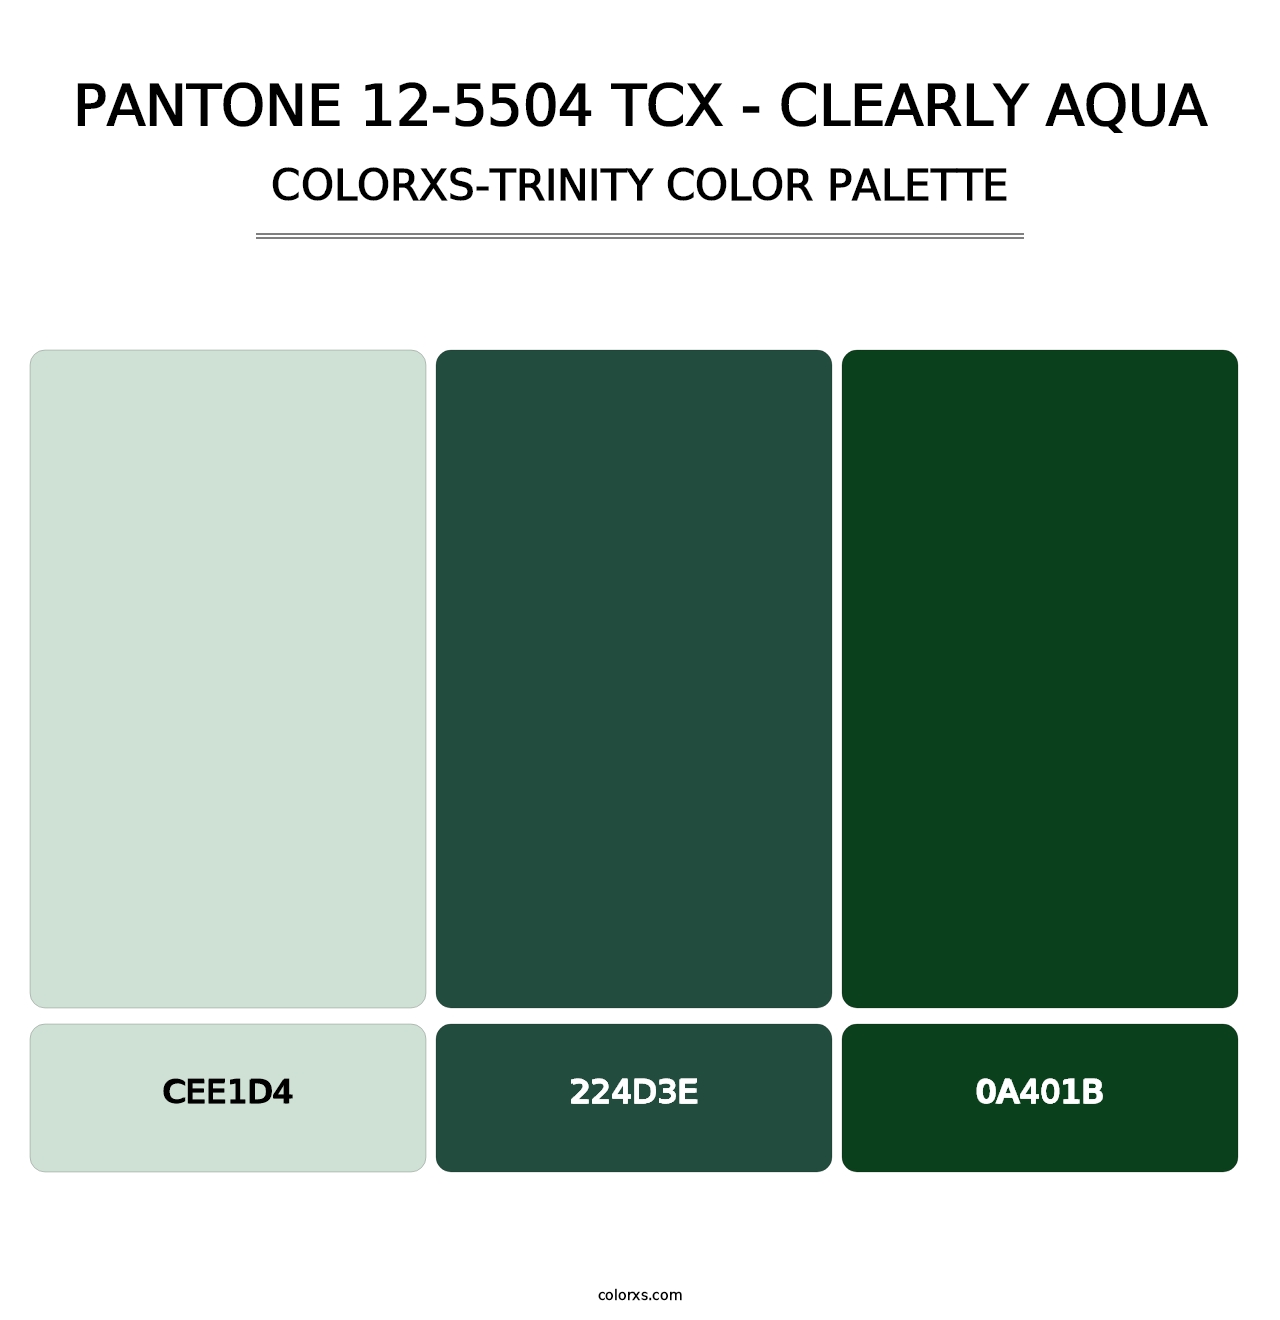 PANTONE 12-5504 TCX - Clearly Aqua - Colorxs Trinity Palette